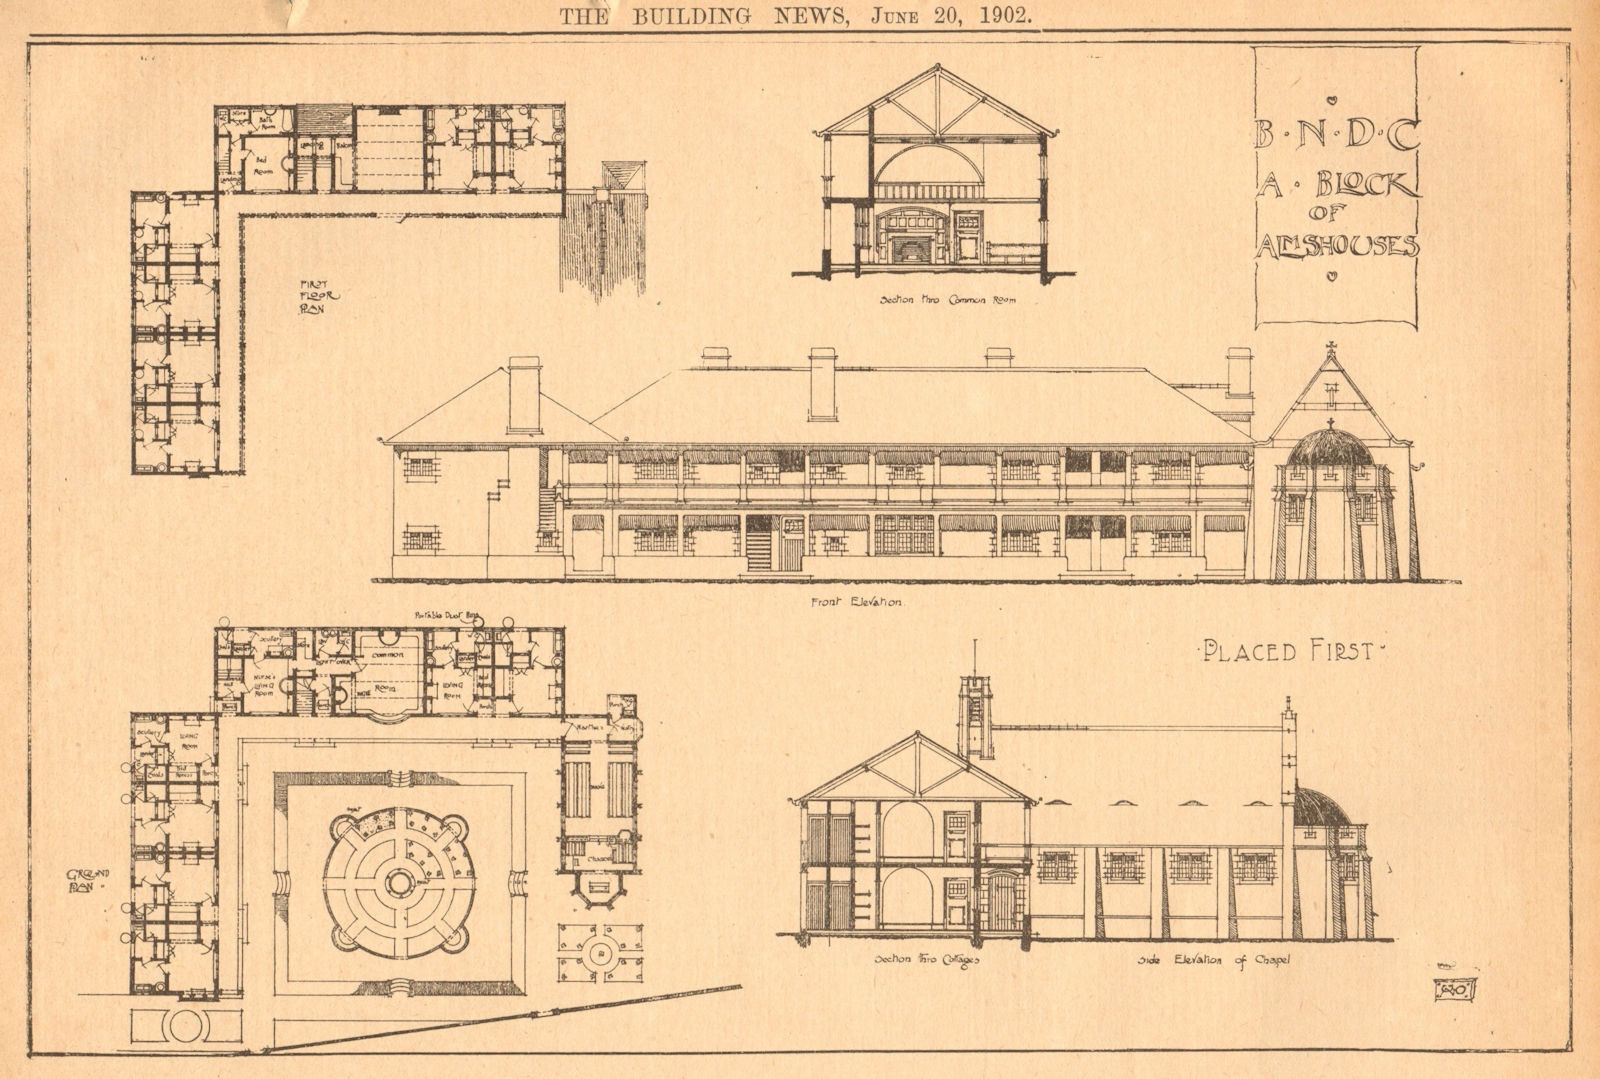 A block of almshouses. Elevations, ground floor & first floor plan 1902 print